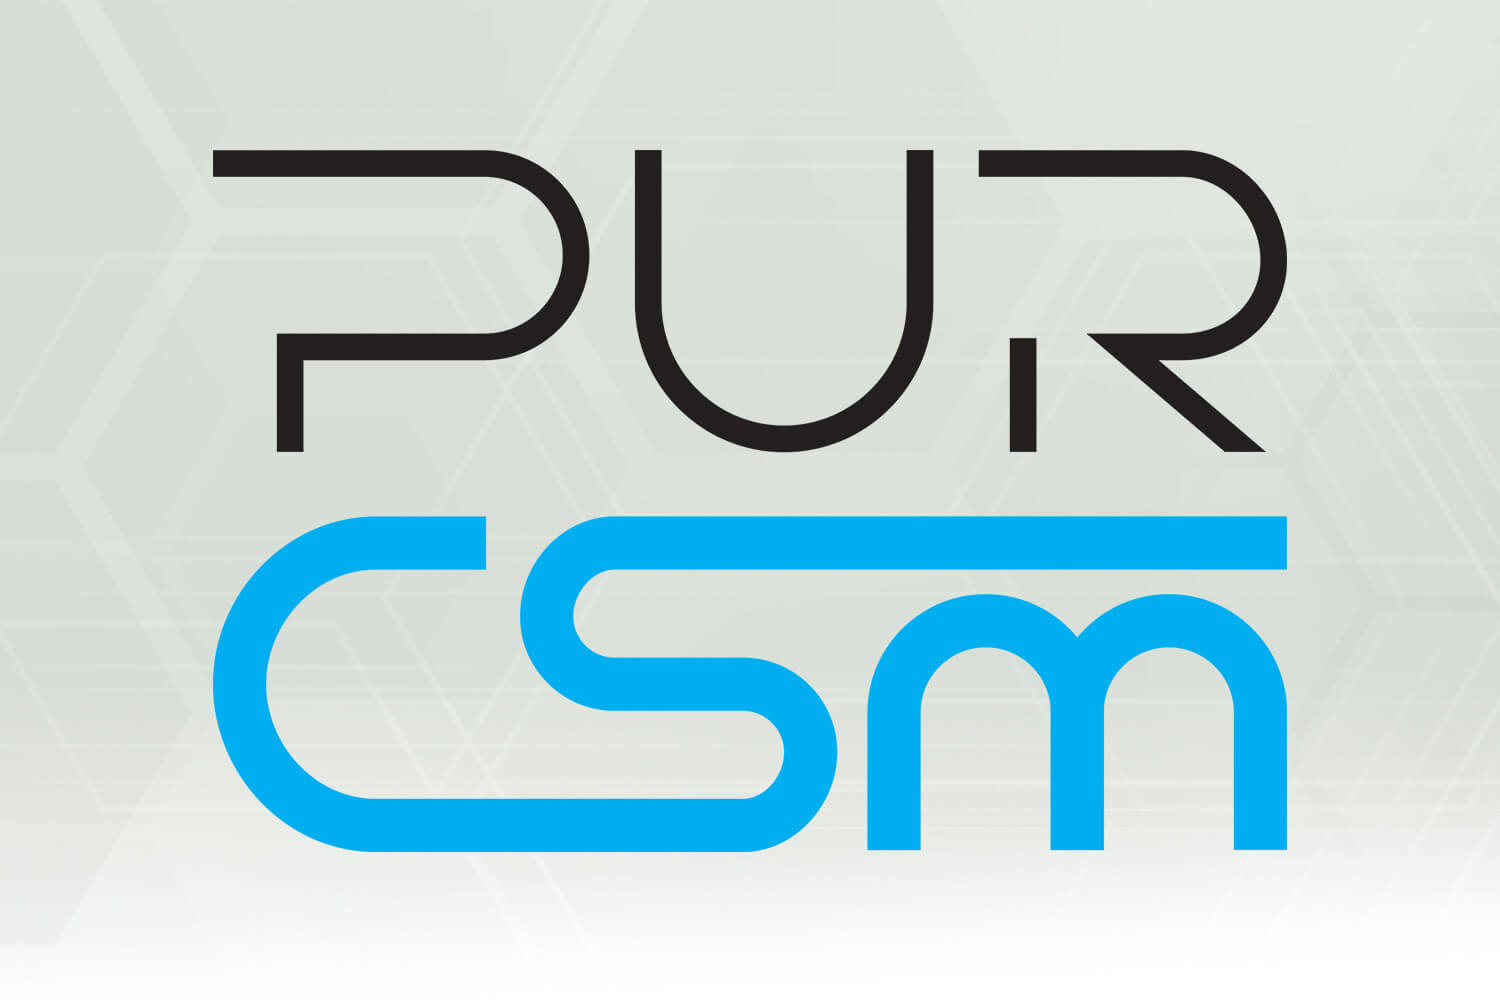 PUR-CSM spray technology